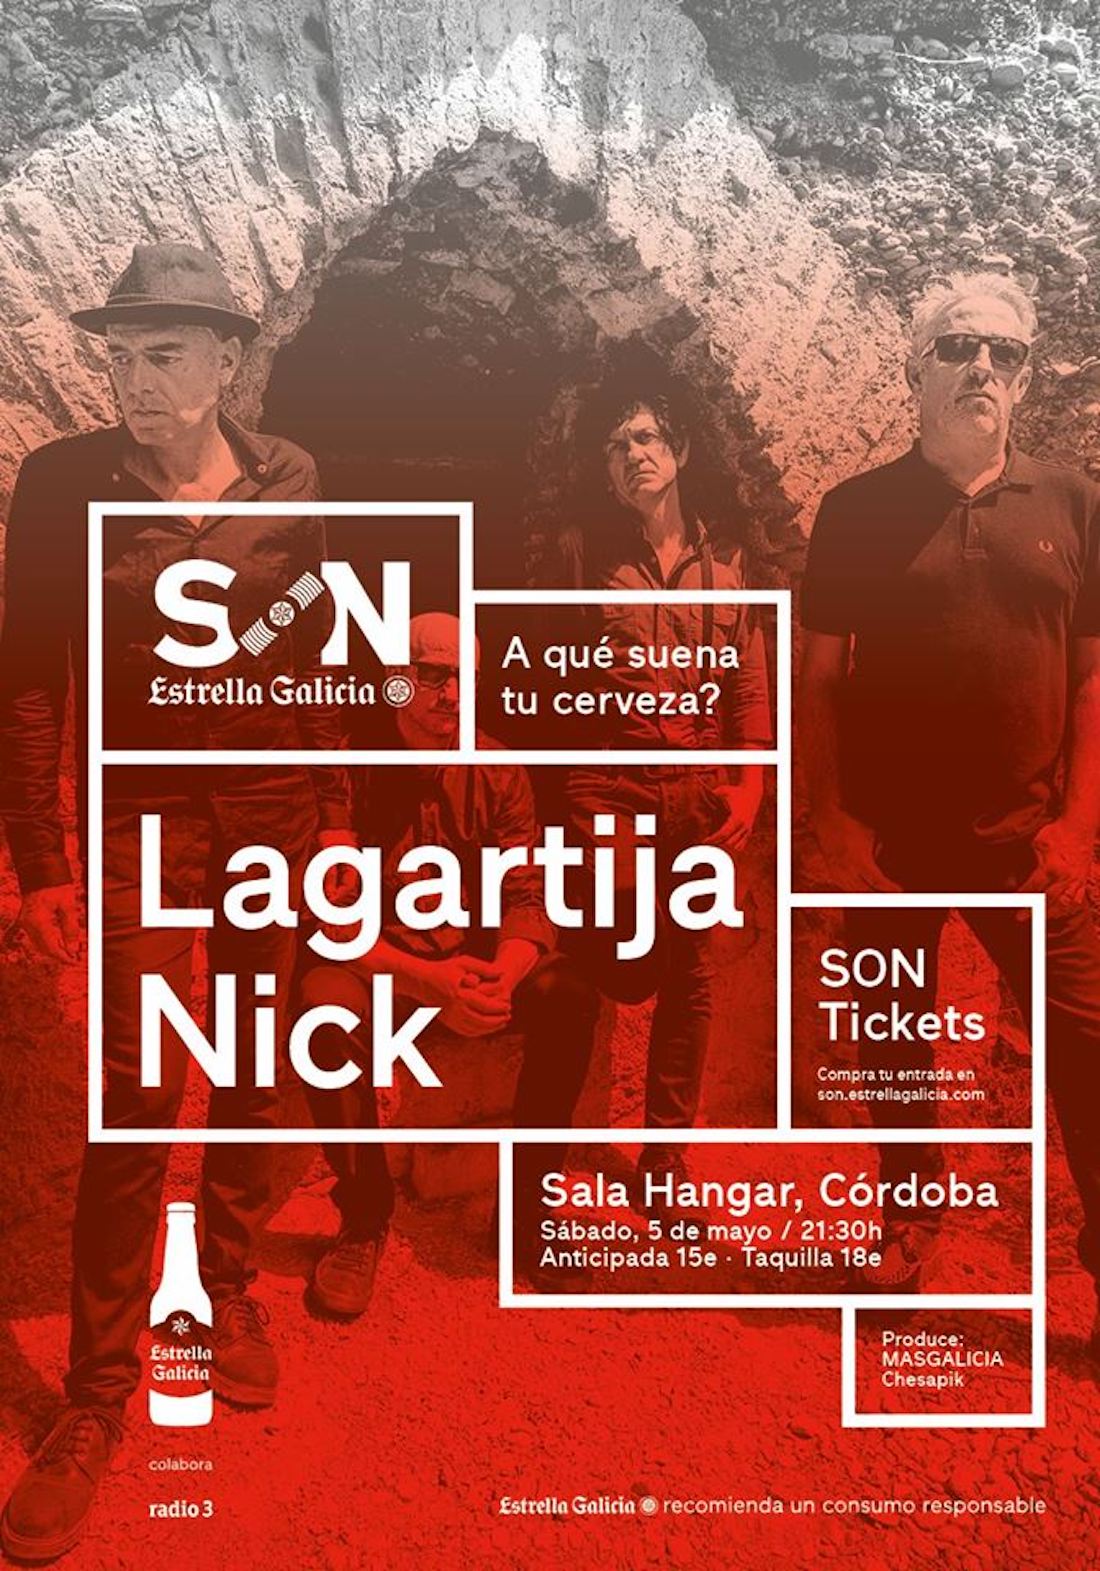 Son Estrella Galicia presenta a Lagartija Nick en Córdoba – Sábado 5 De Mayo, Sala Hangar